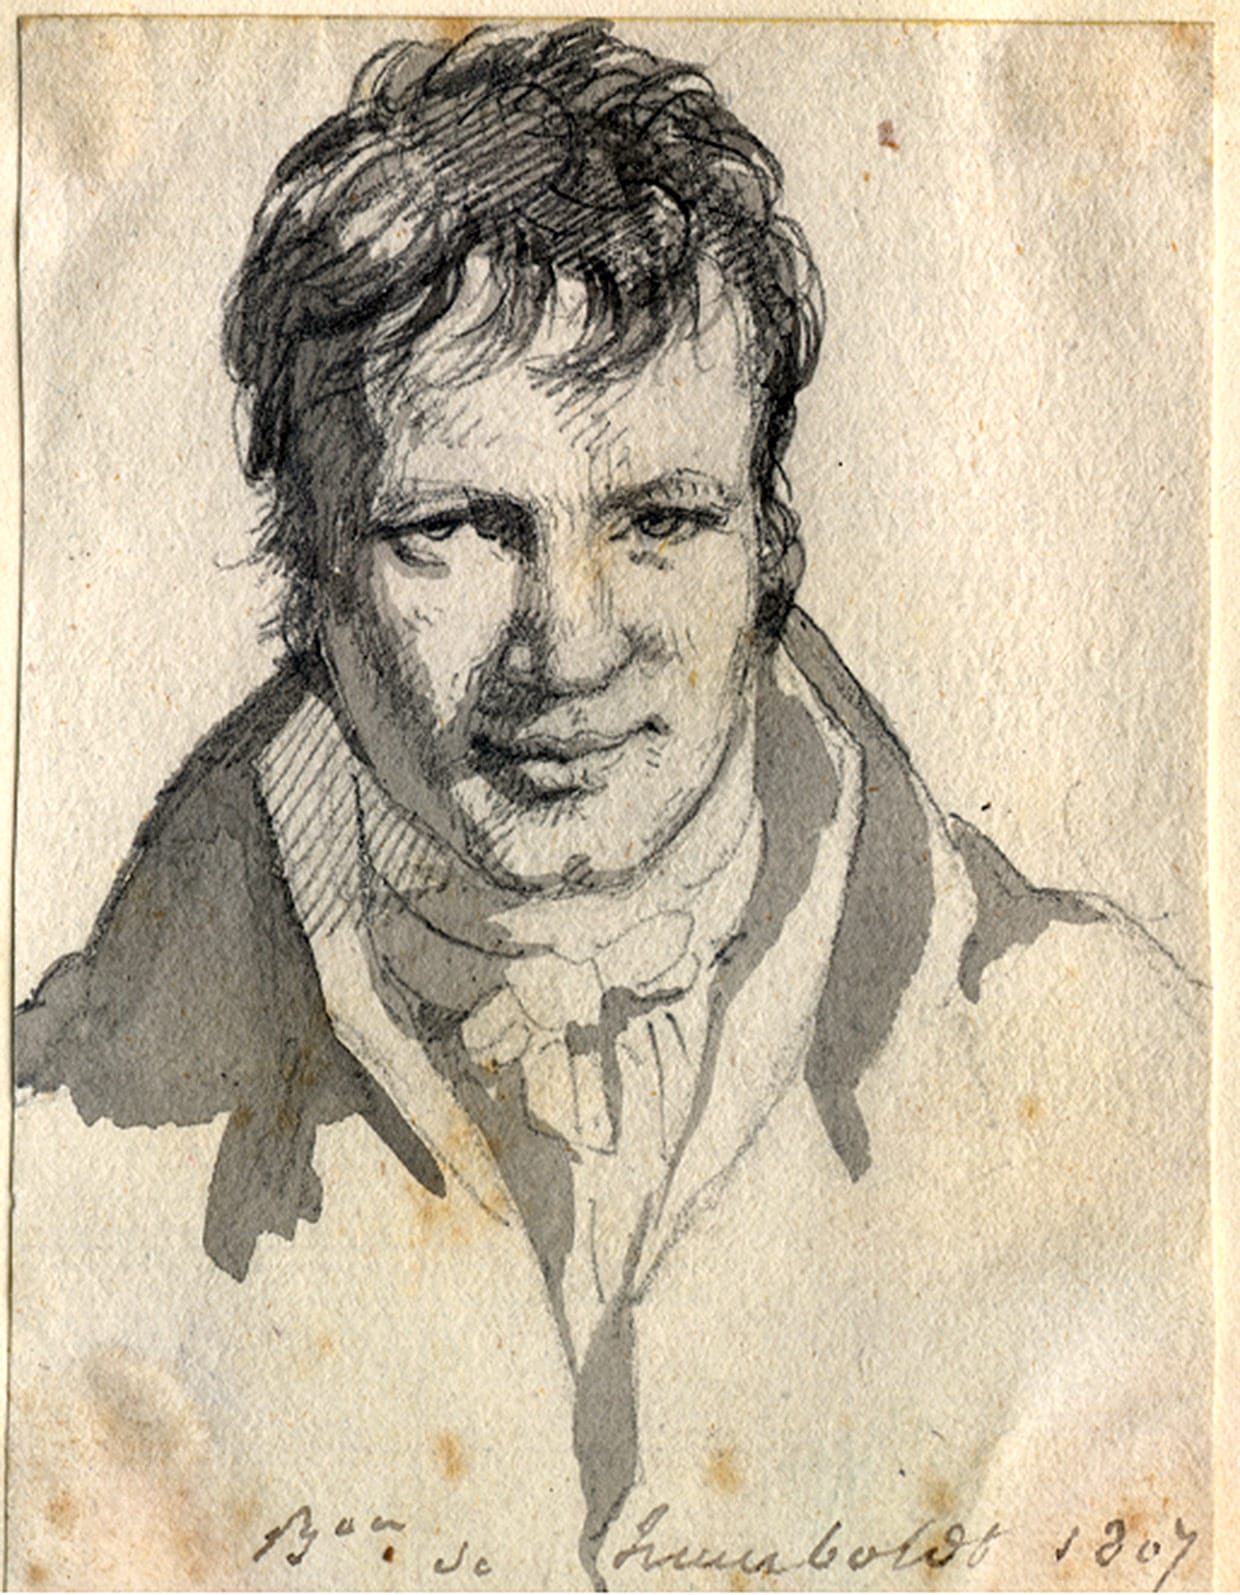 Sketch of Alexander Von Humboldt